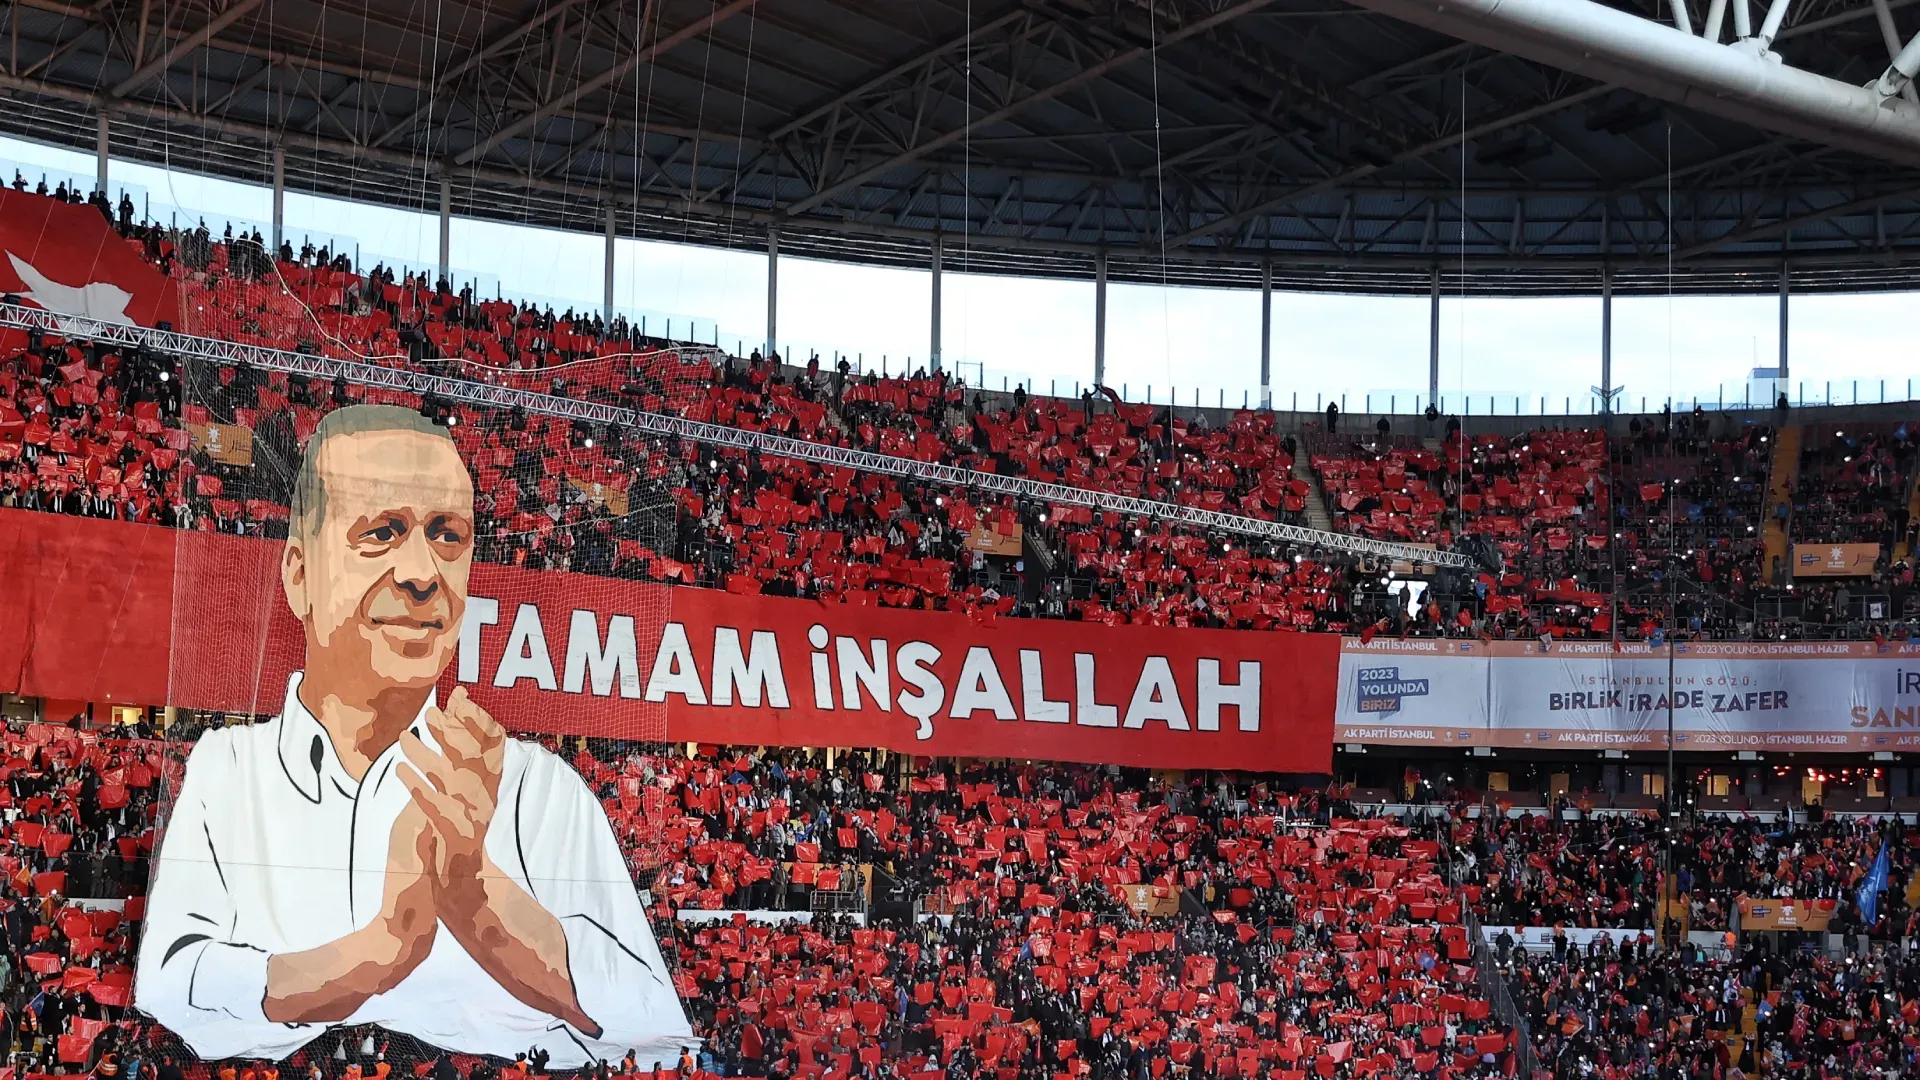 Turkiye | Post-election unrest and crisis scenarios